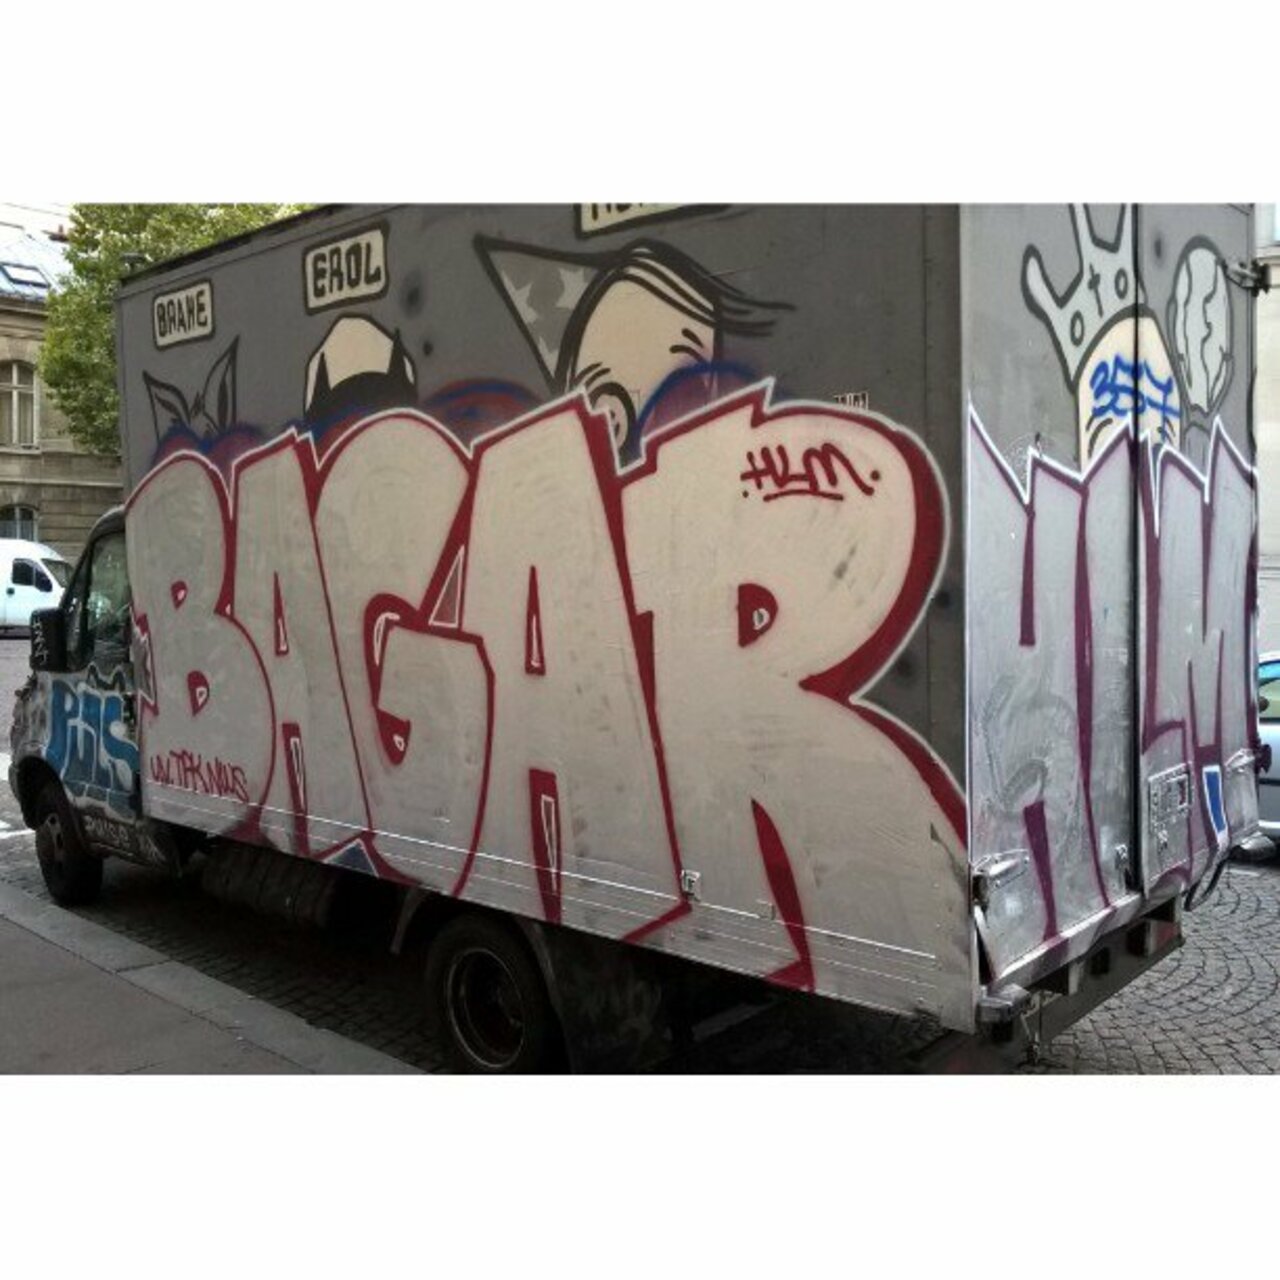 #Paris #graffiti photo by @maxdimontemarciano http://ift.tt/1M4jgAQ #StreetArt https://t.co/LIZSu7vPOX